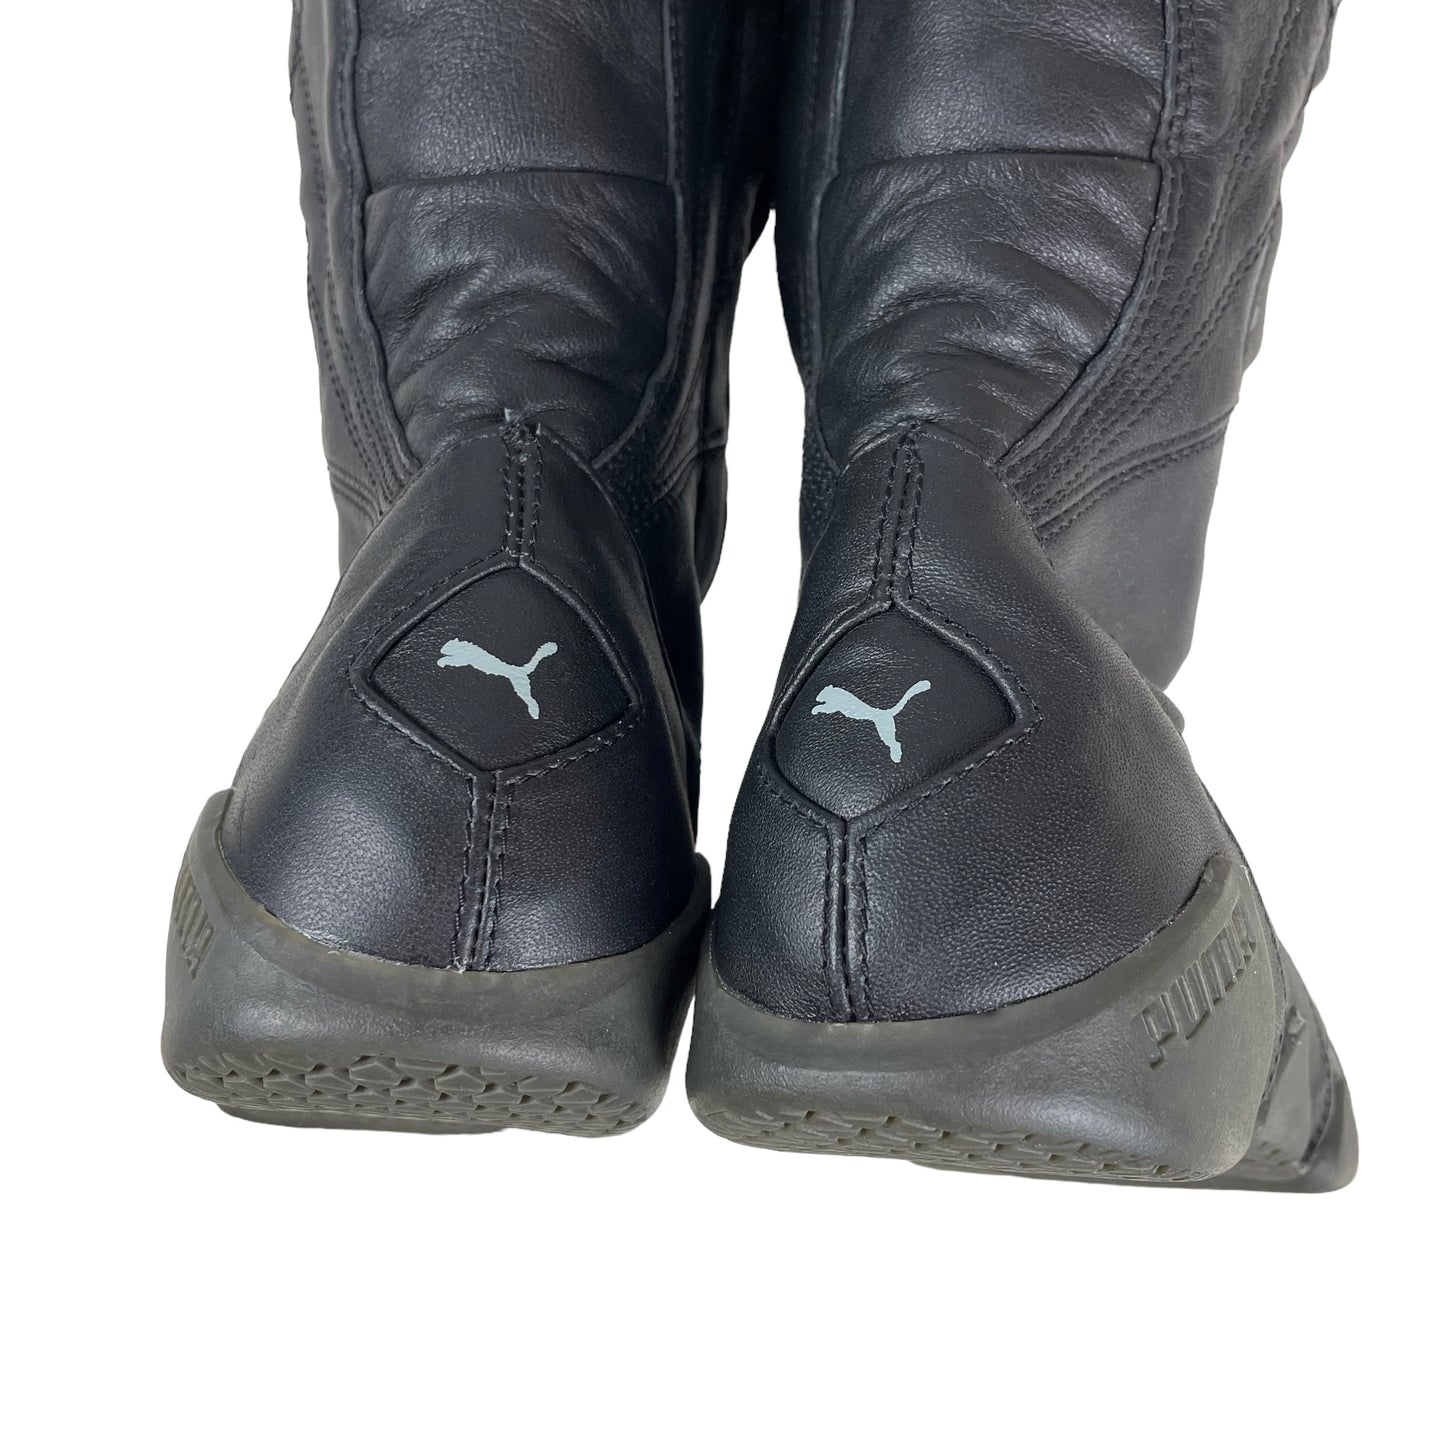 Puma Satori boots